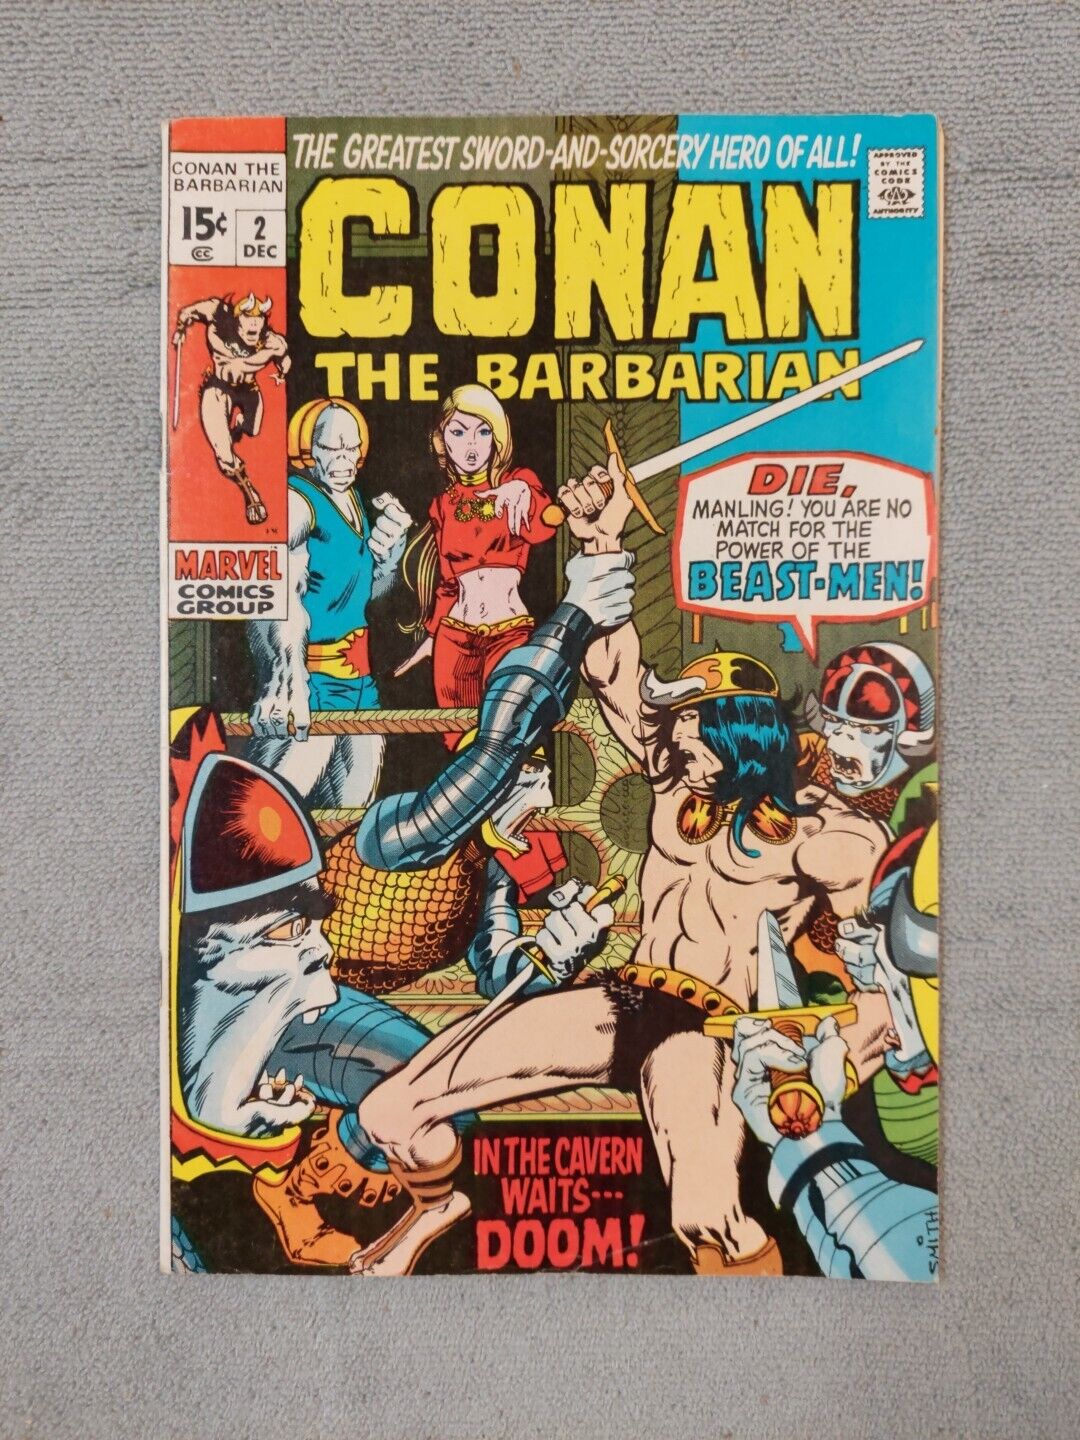 CONAN THE BARBARIAN #2      BARRY SMITH     MARVEL COMICS 1970      (F428)